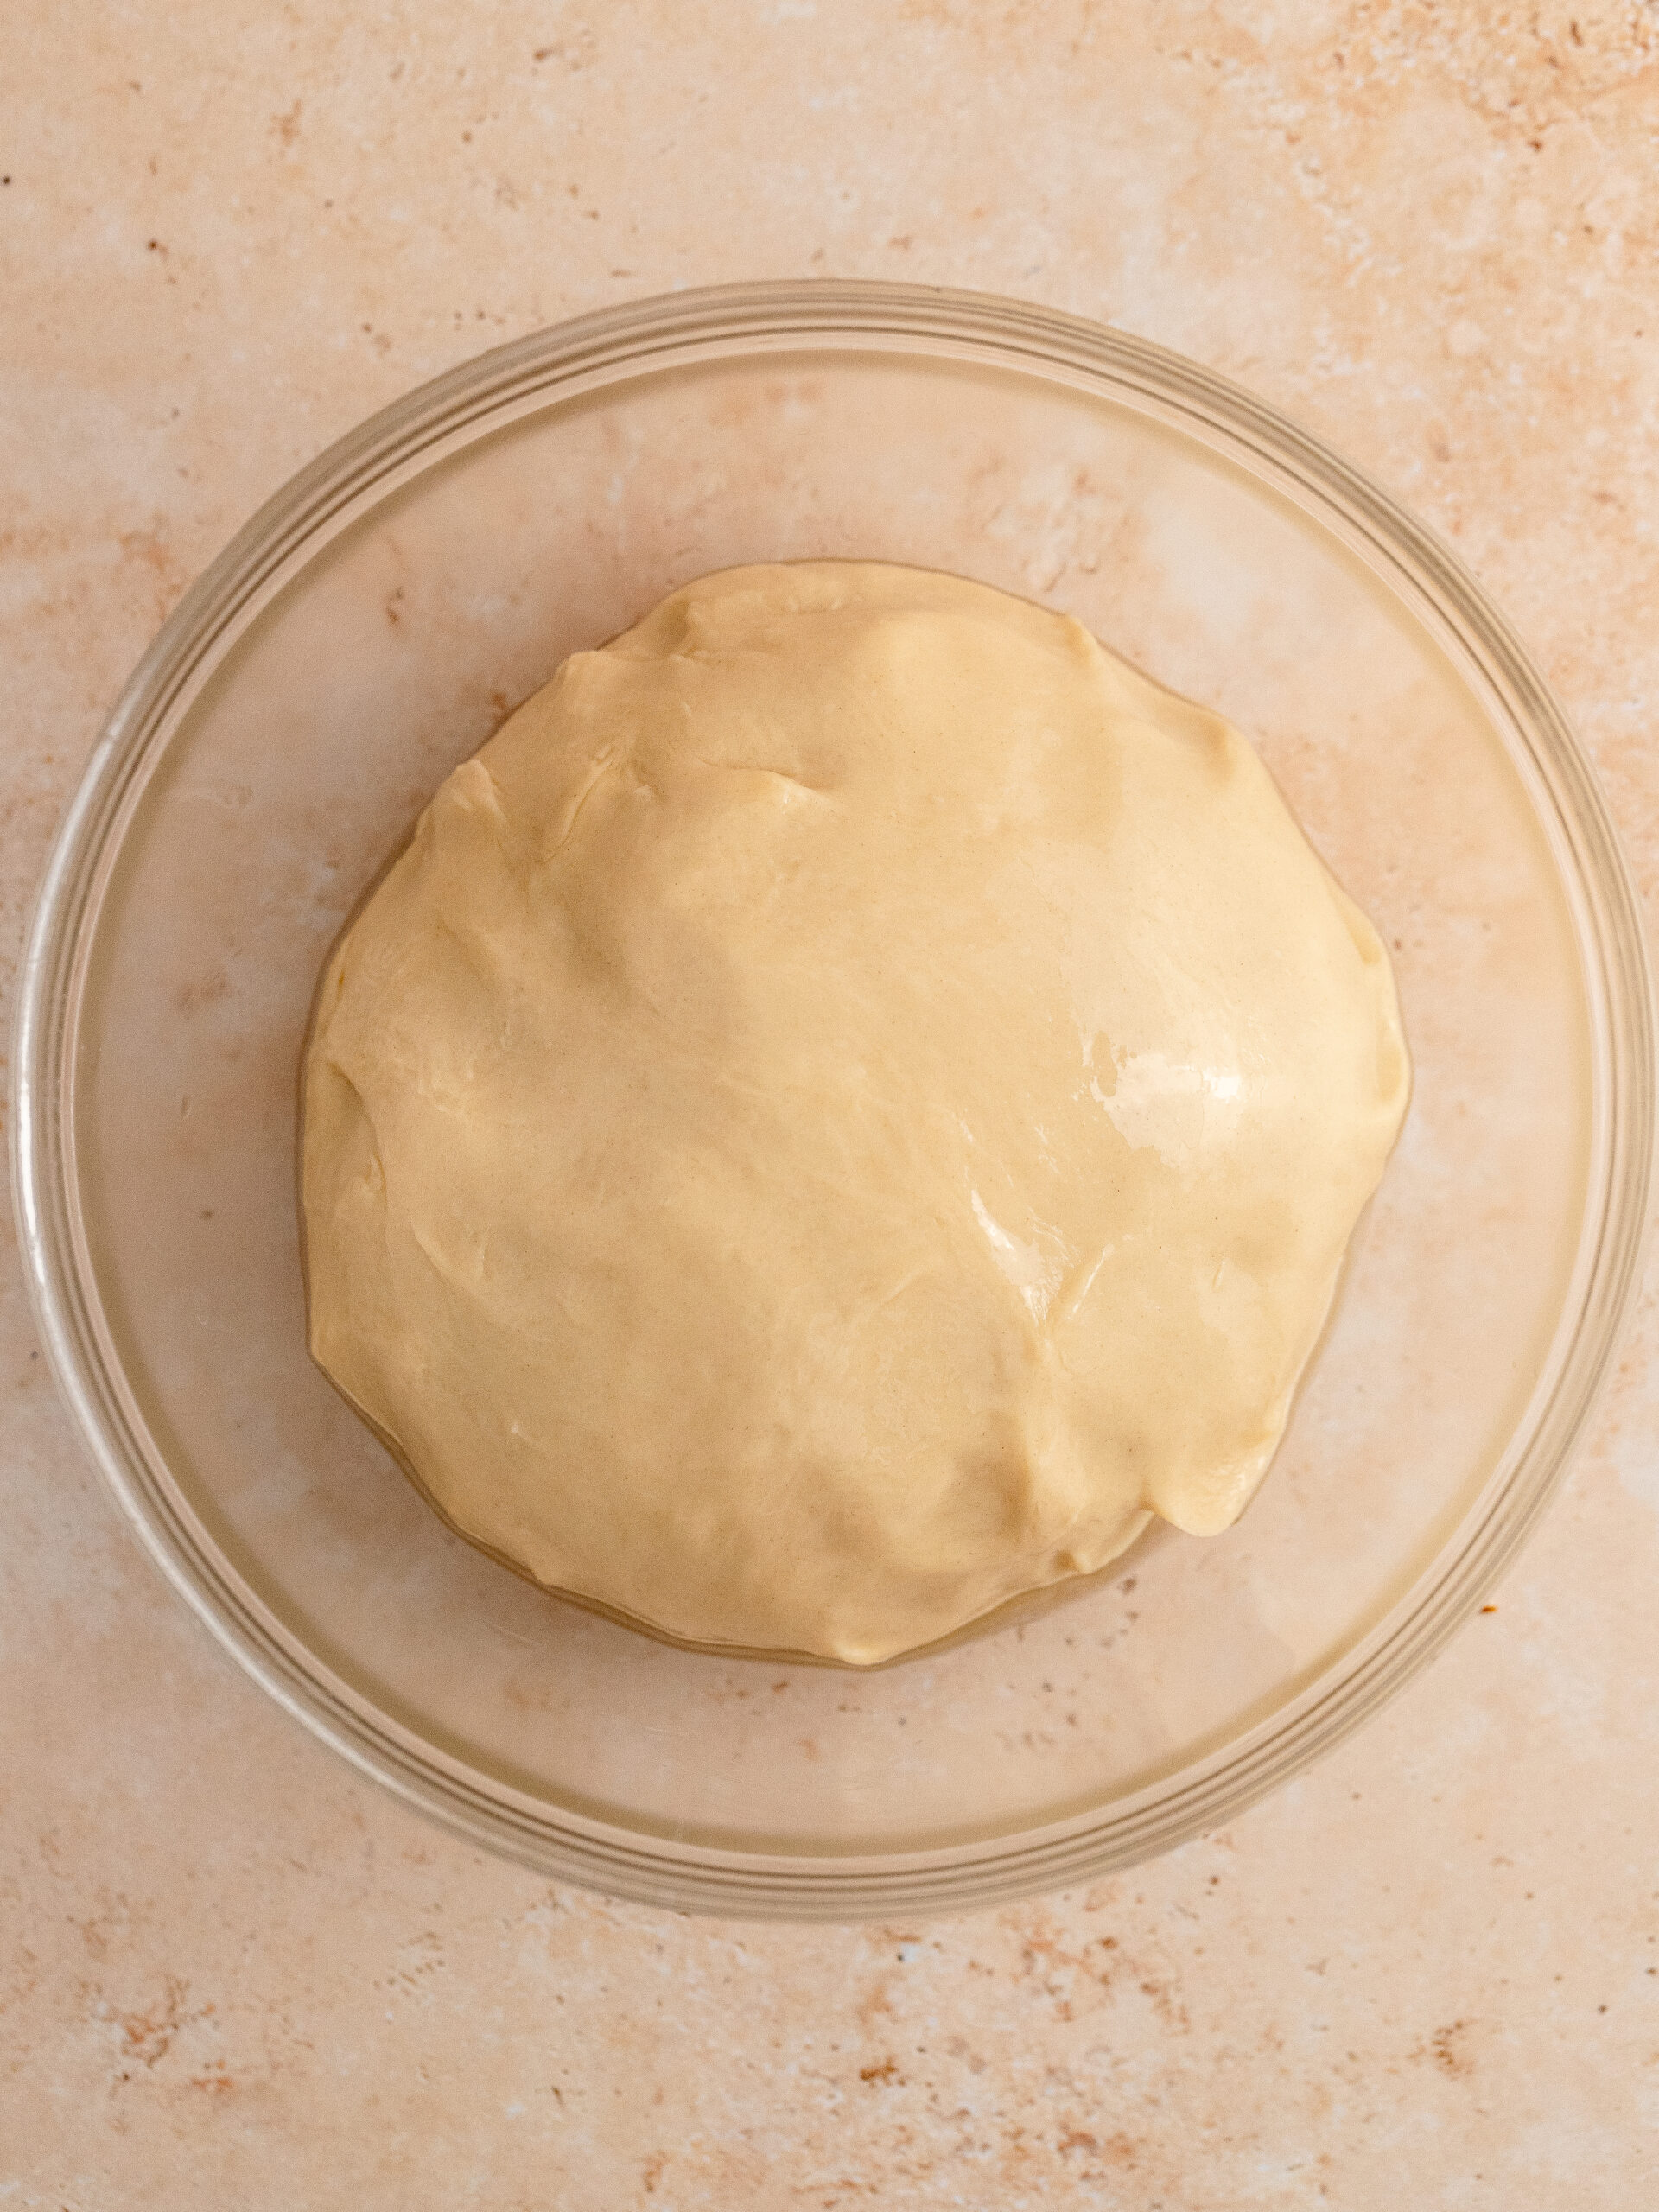 Brioche dough, 1st rise.